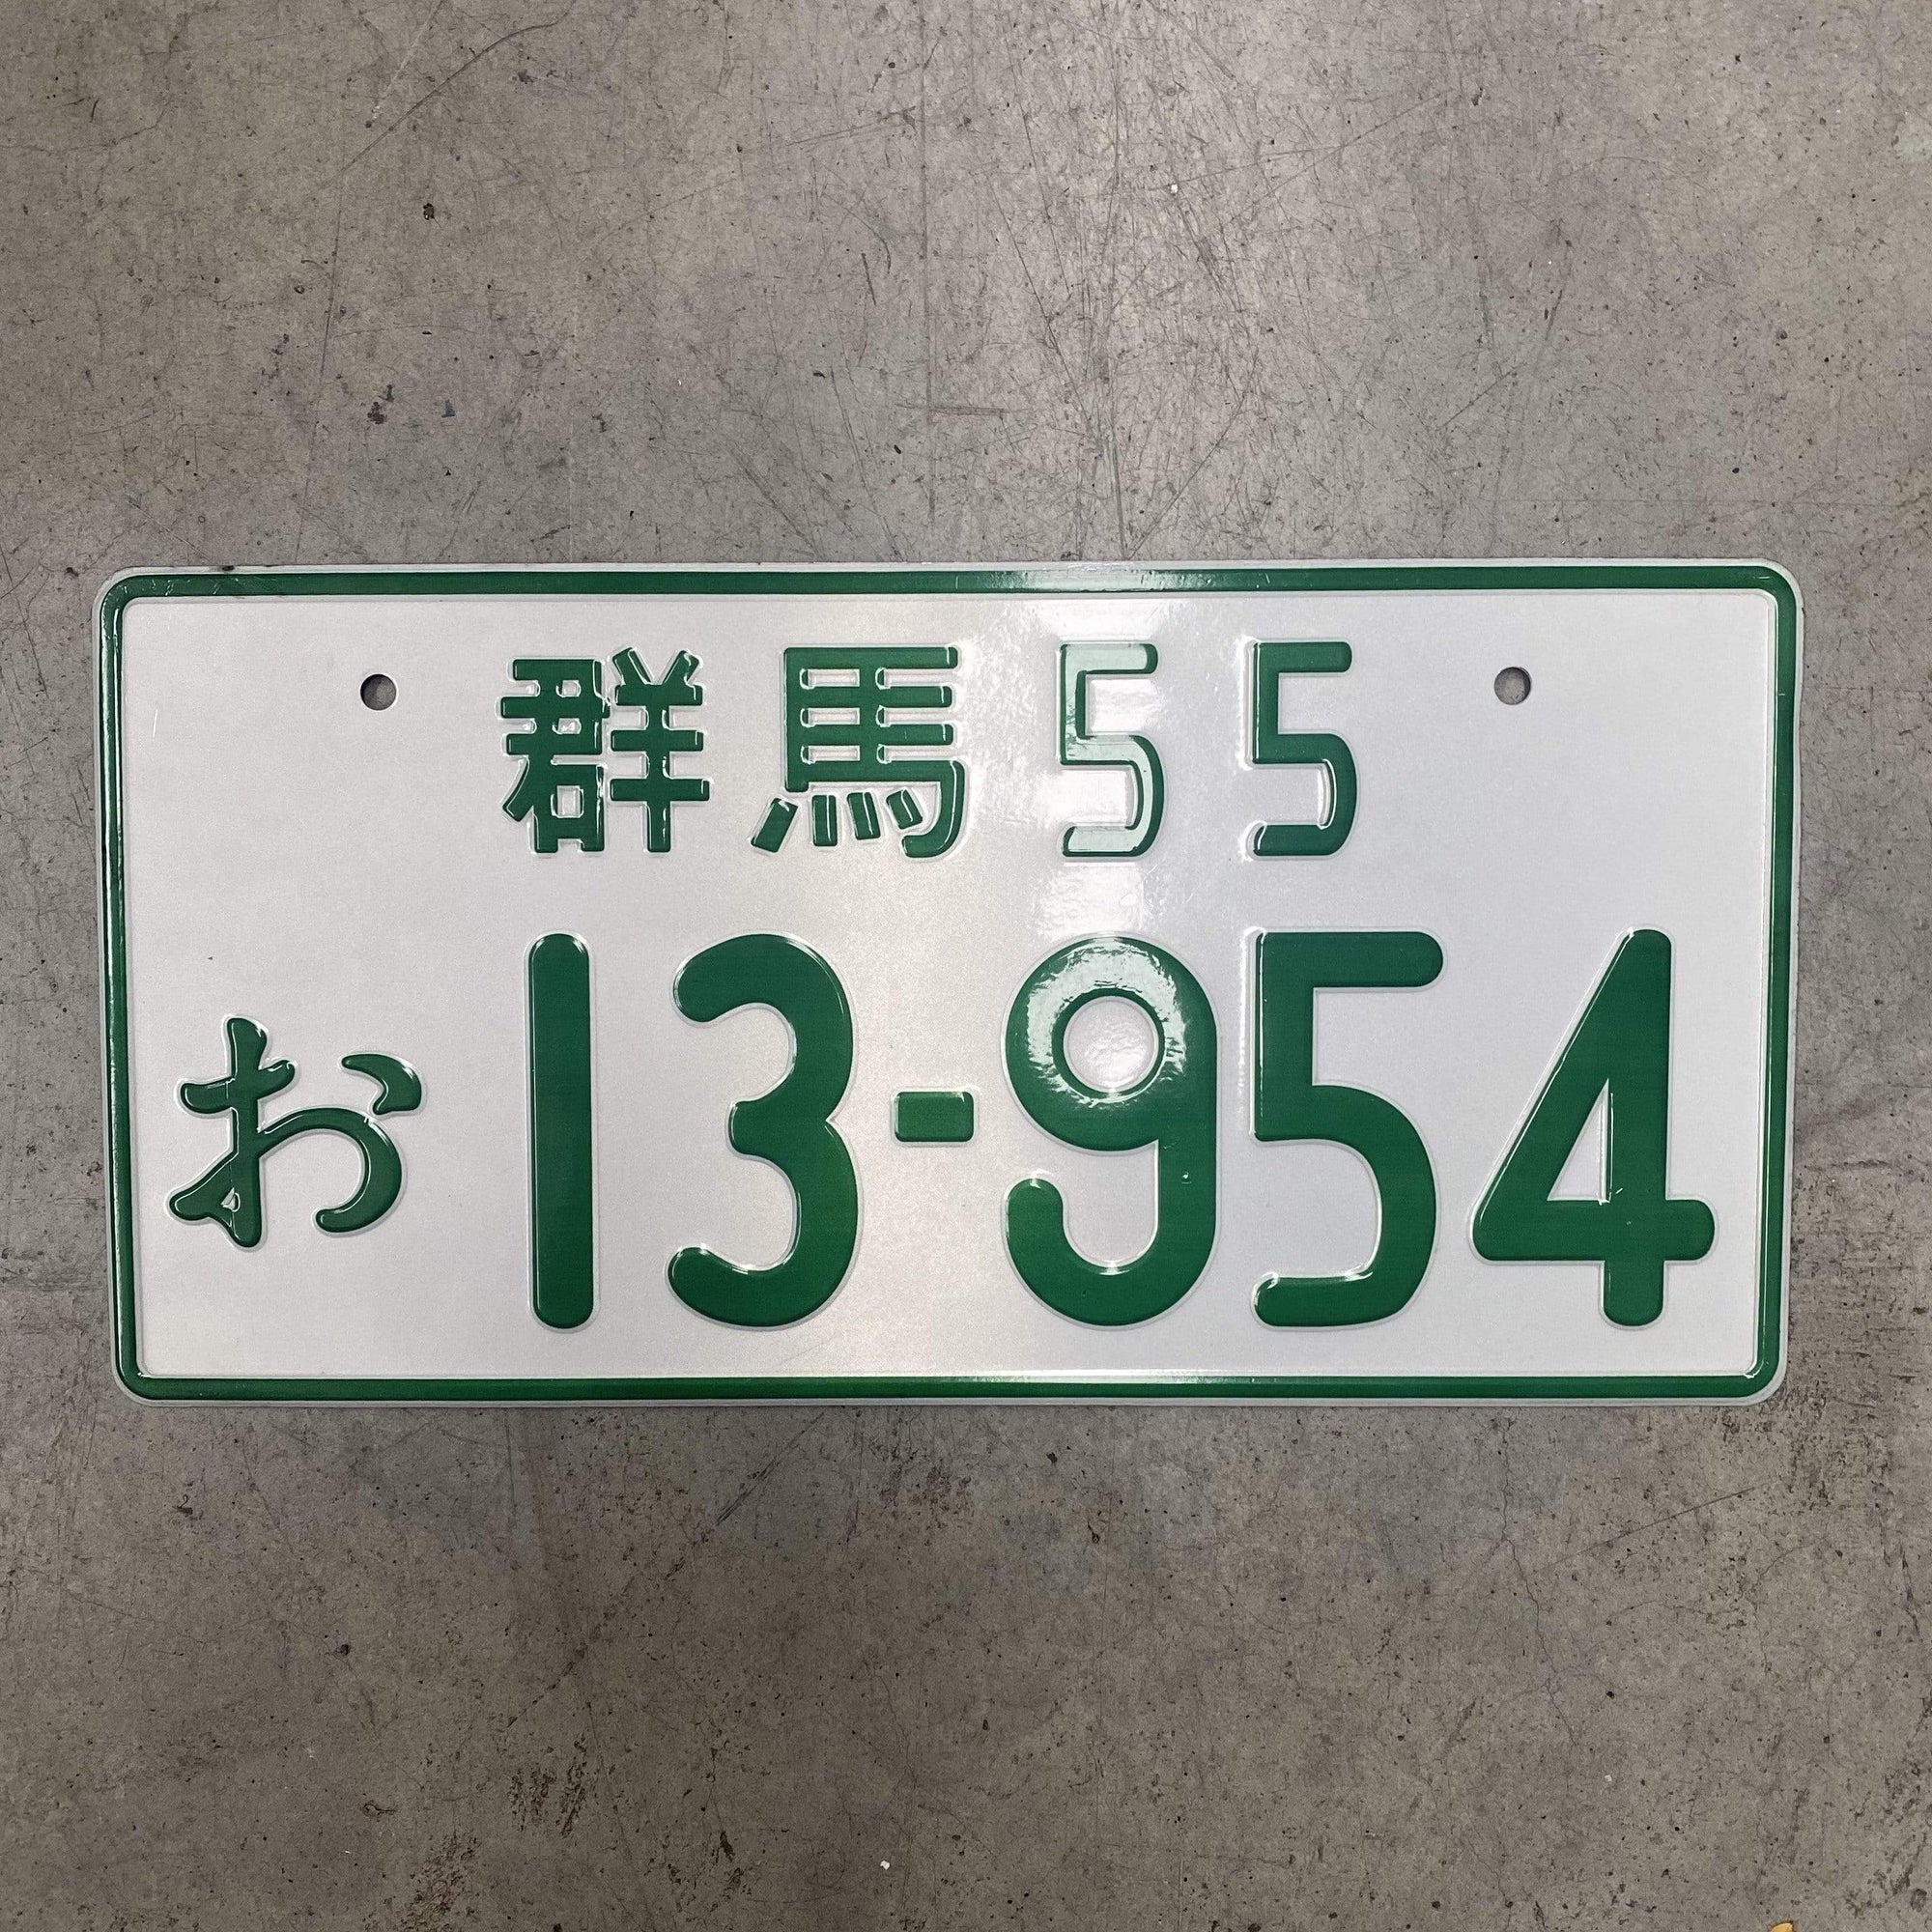 I Love Drift Clothing Japanese Number Plate - 13-954